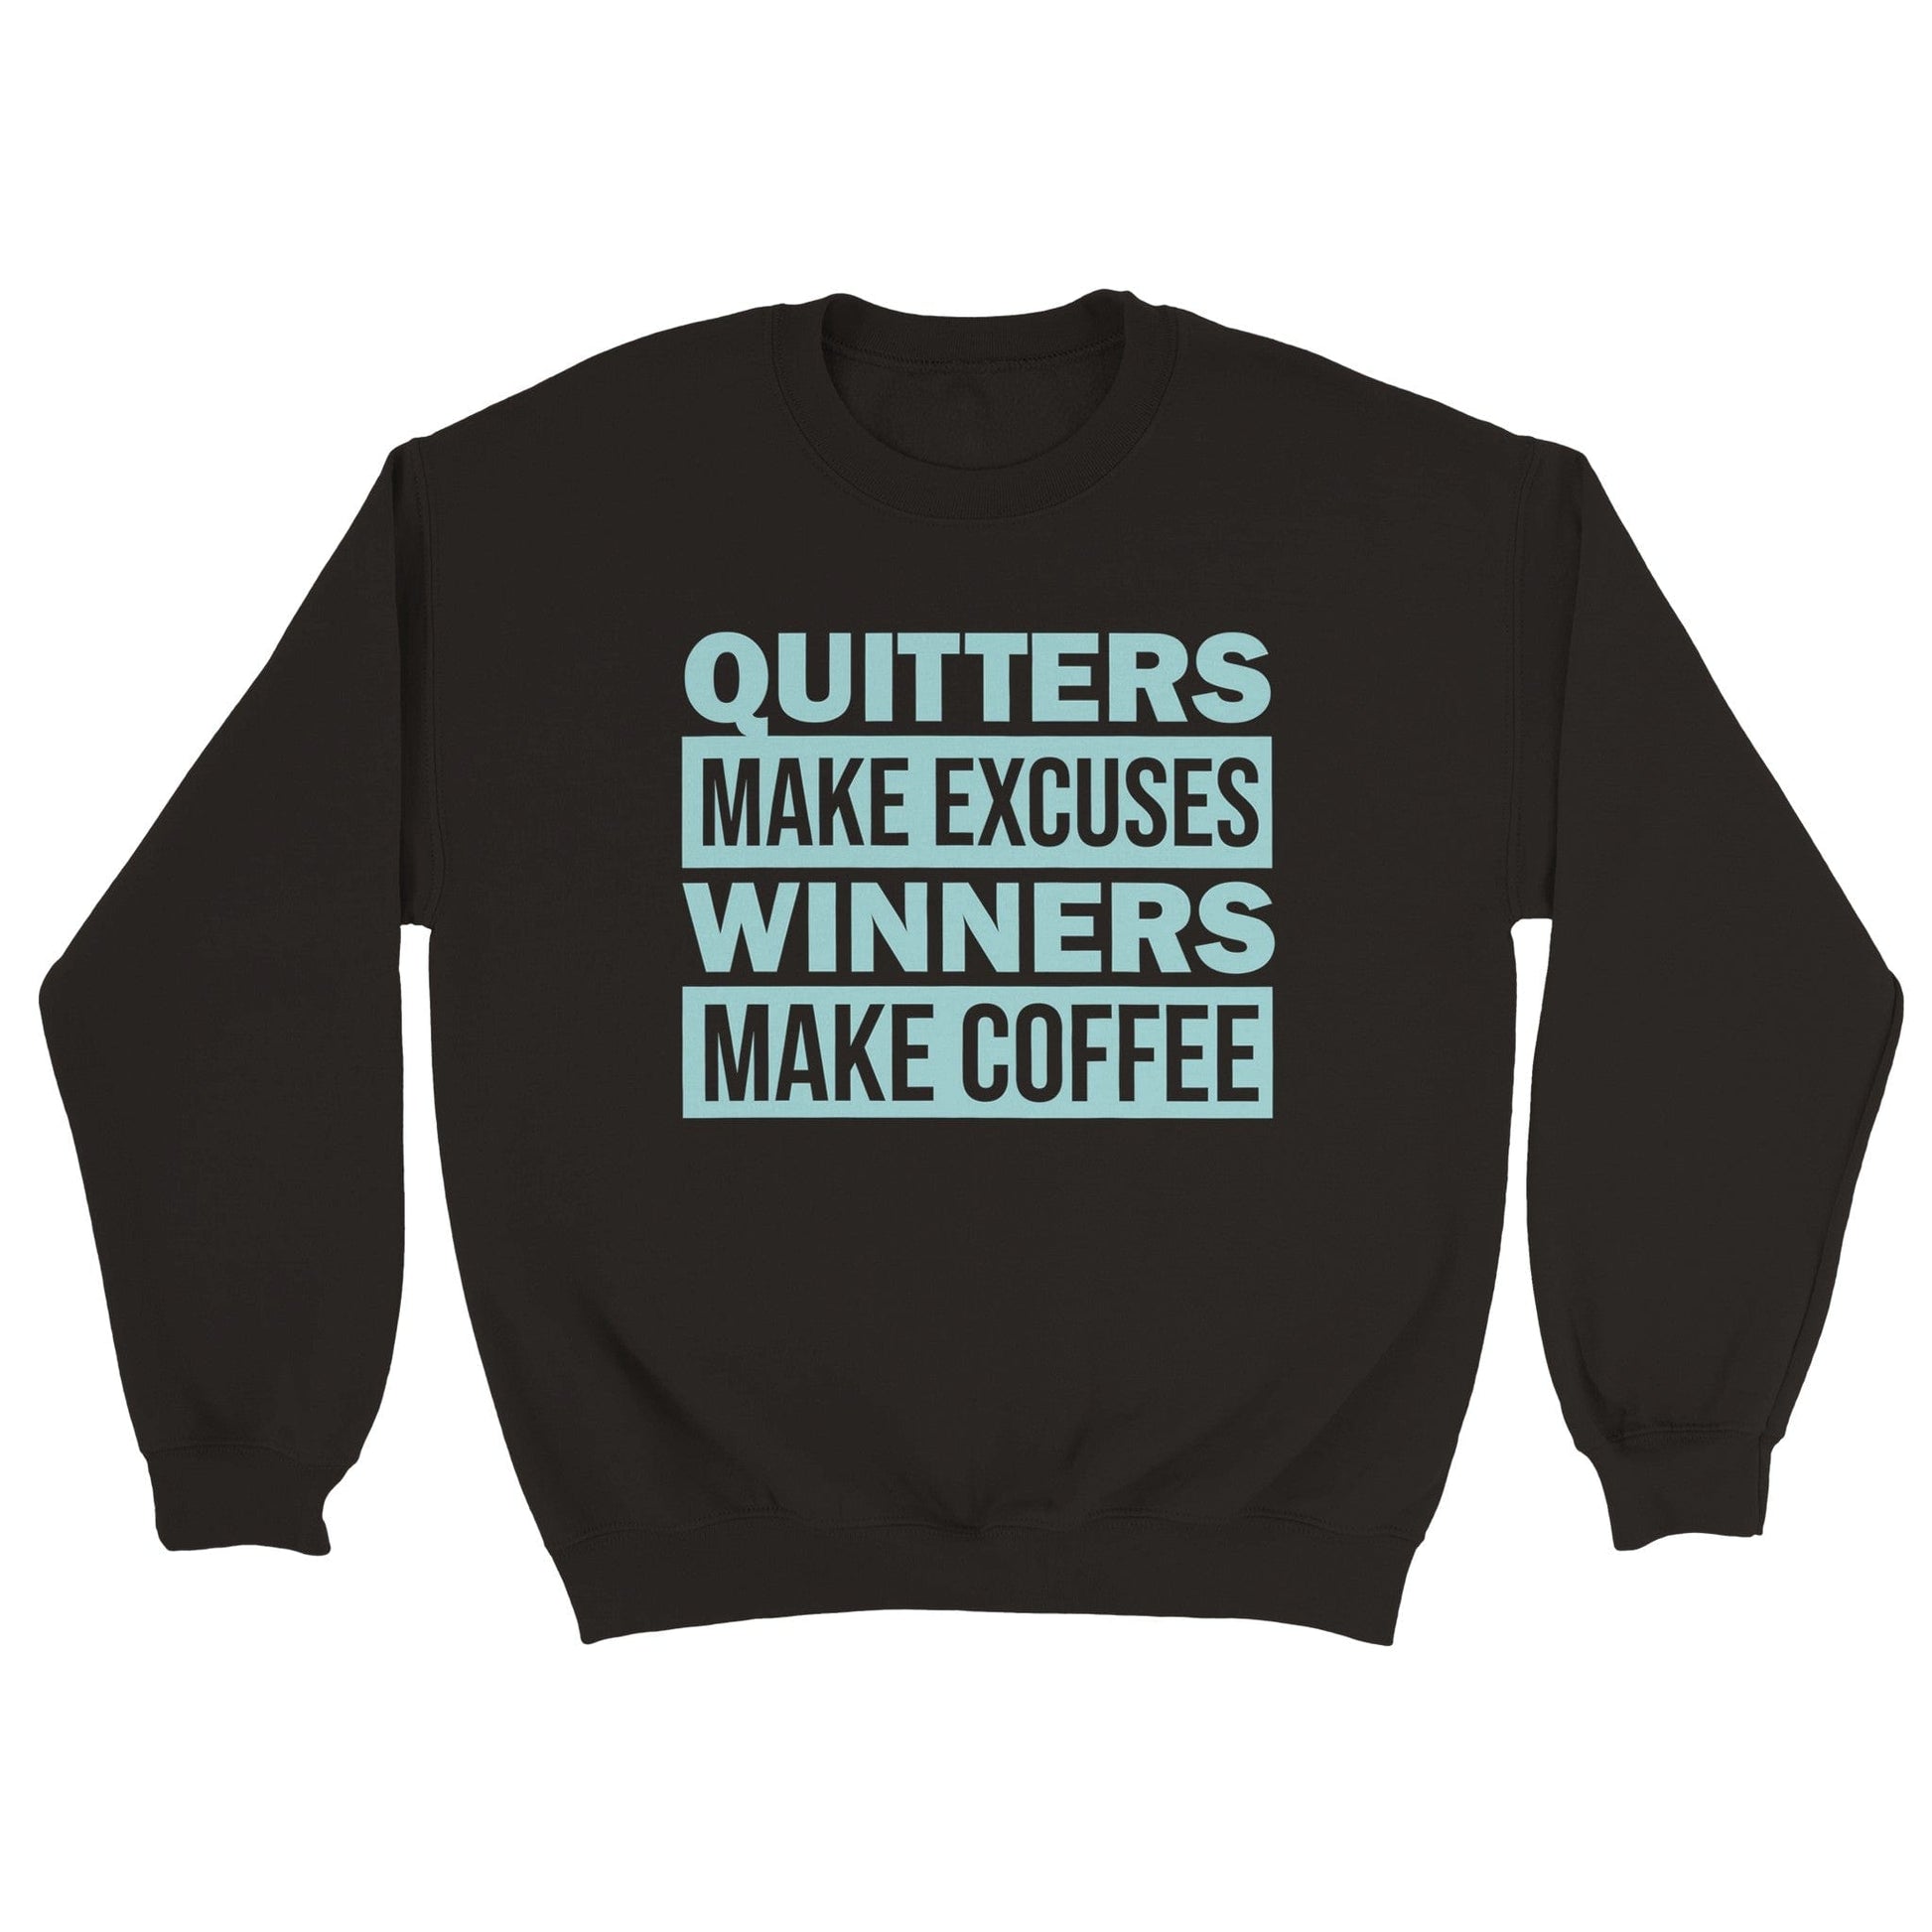 Good Bean Gifts Quitters Make Excuses, Winners make Coffee - Classic Unisex Crewneck Sweatshirt Black / M